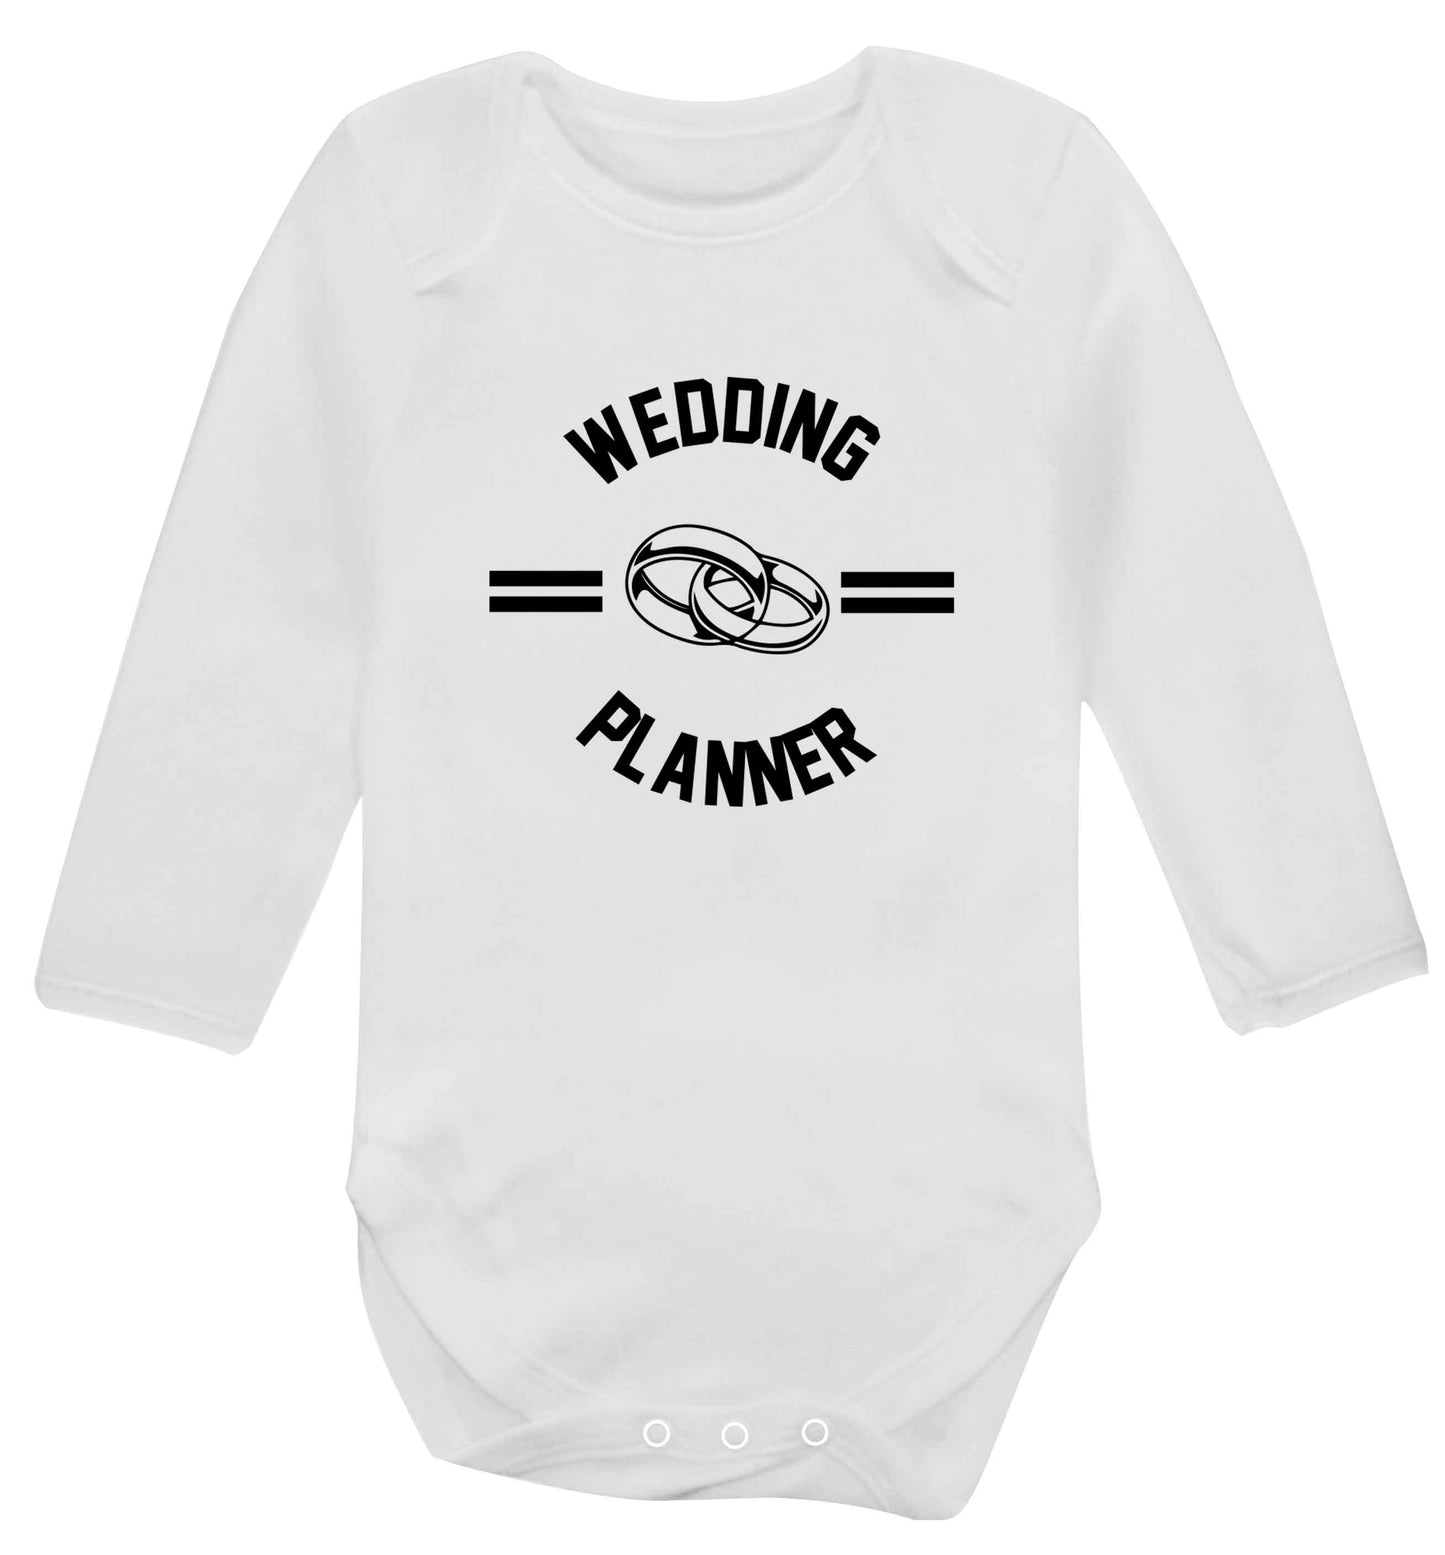 Wedding planner baby vest long sleeved white 6-12 months